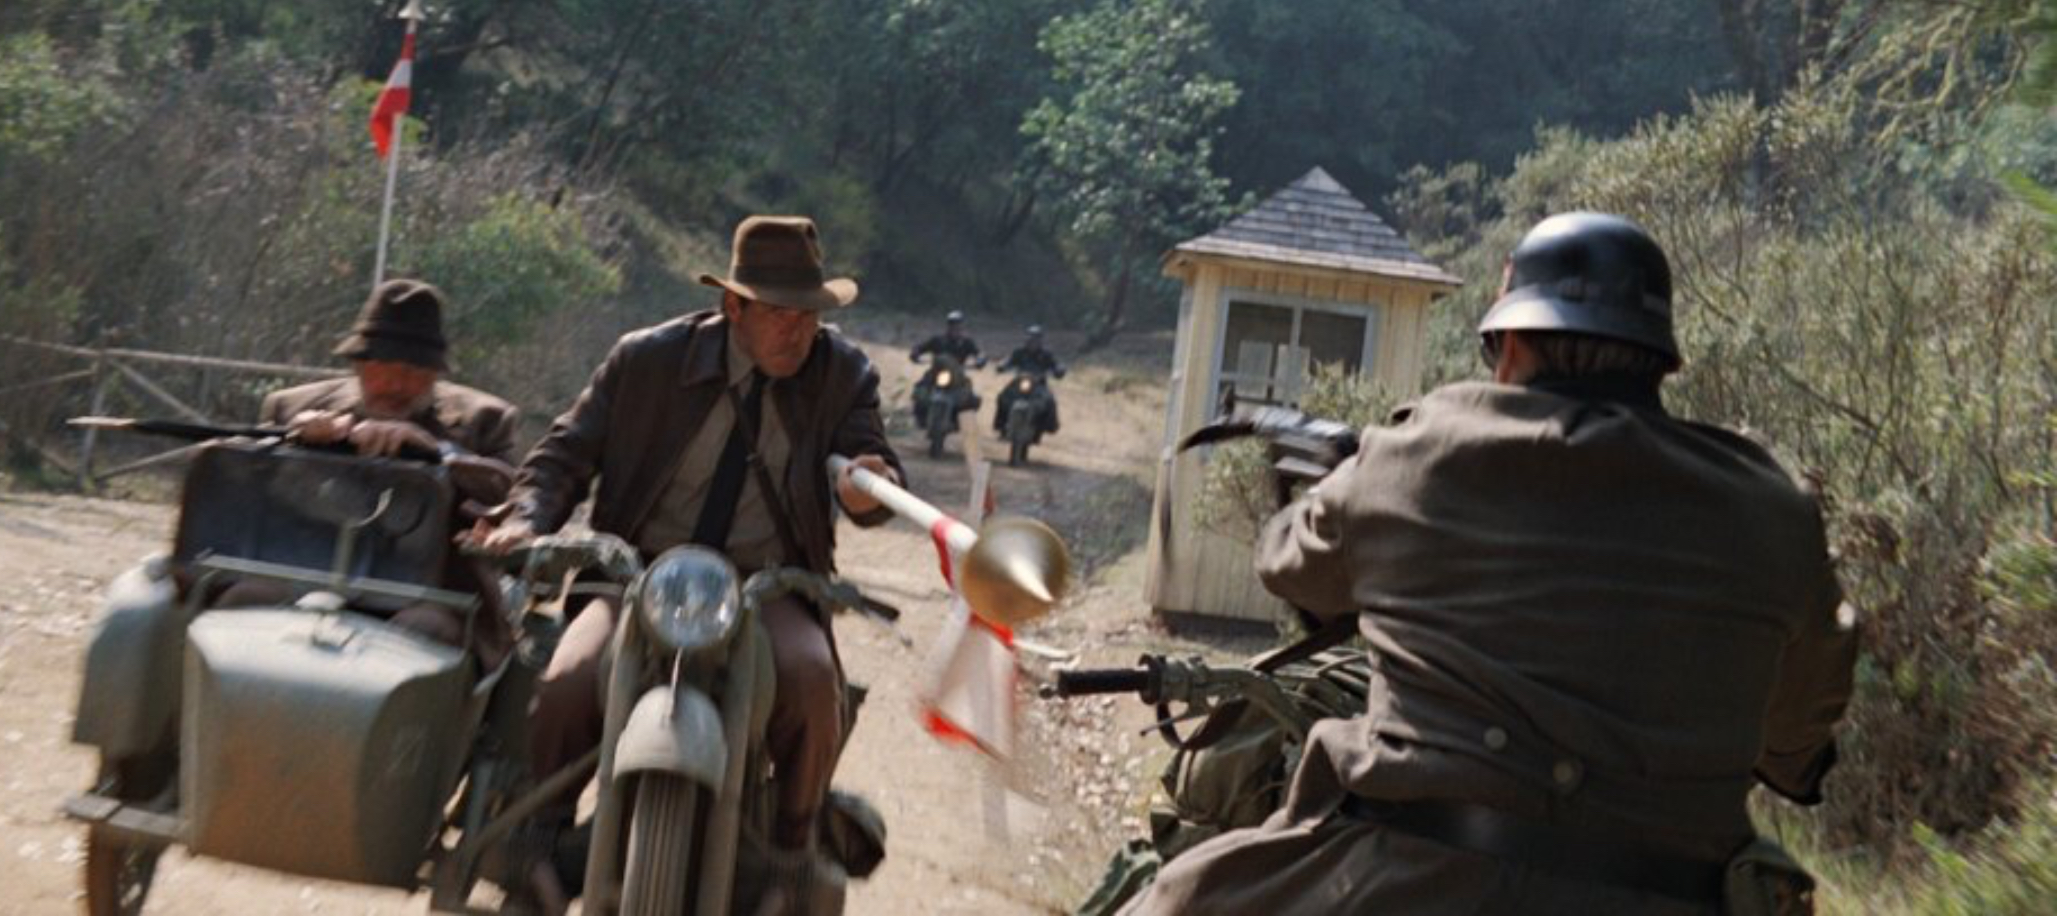 The Motorcycle Chase, Indiana Jones Wiki